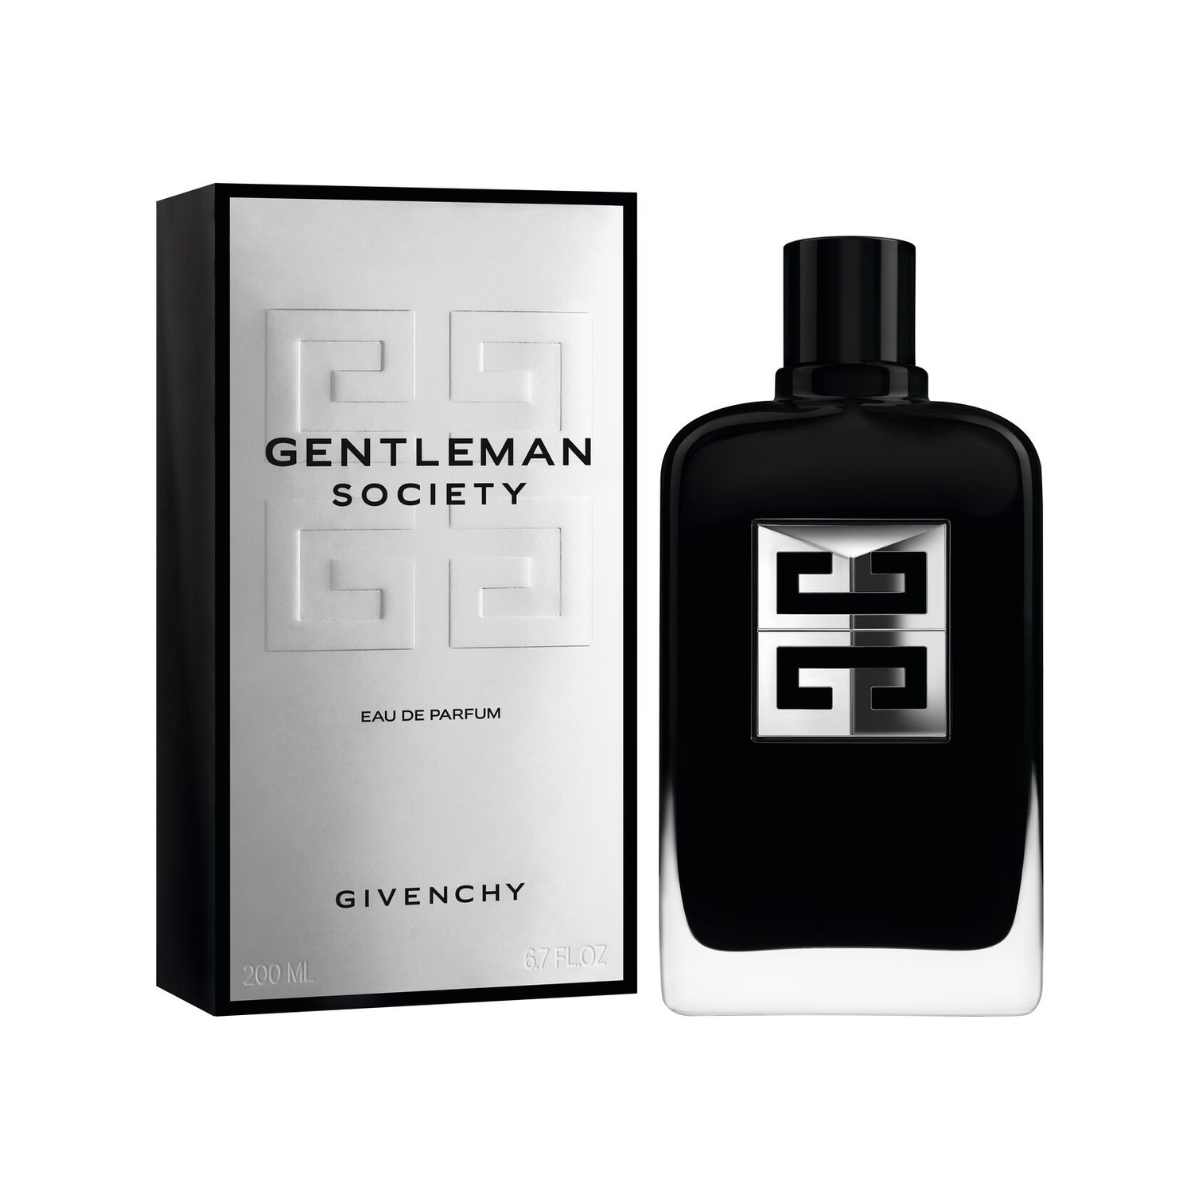 Givenchy Gentleman Society Eau de Parfum